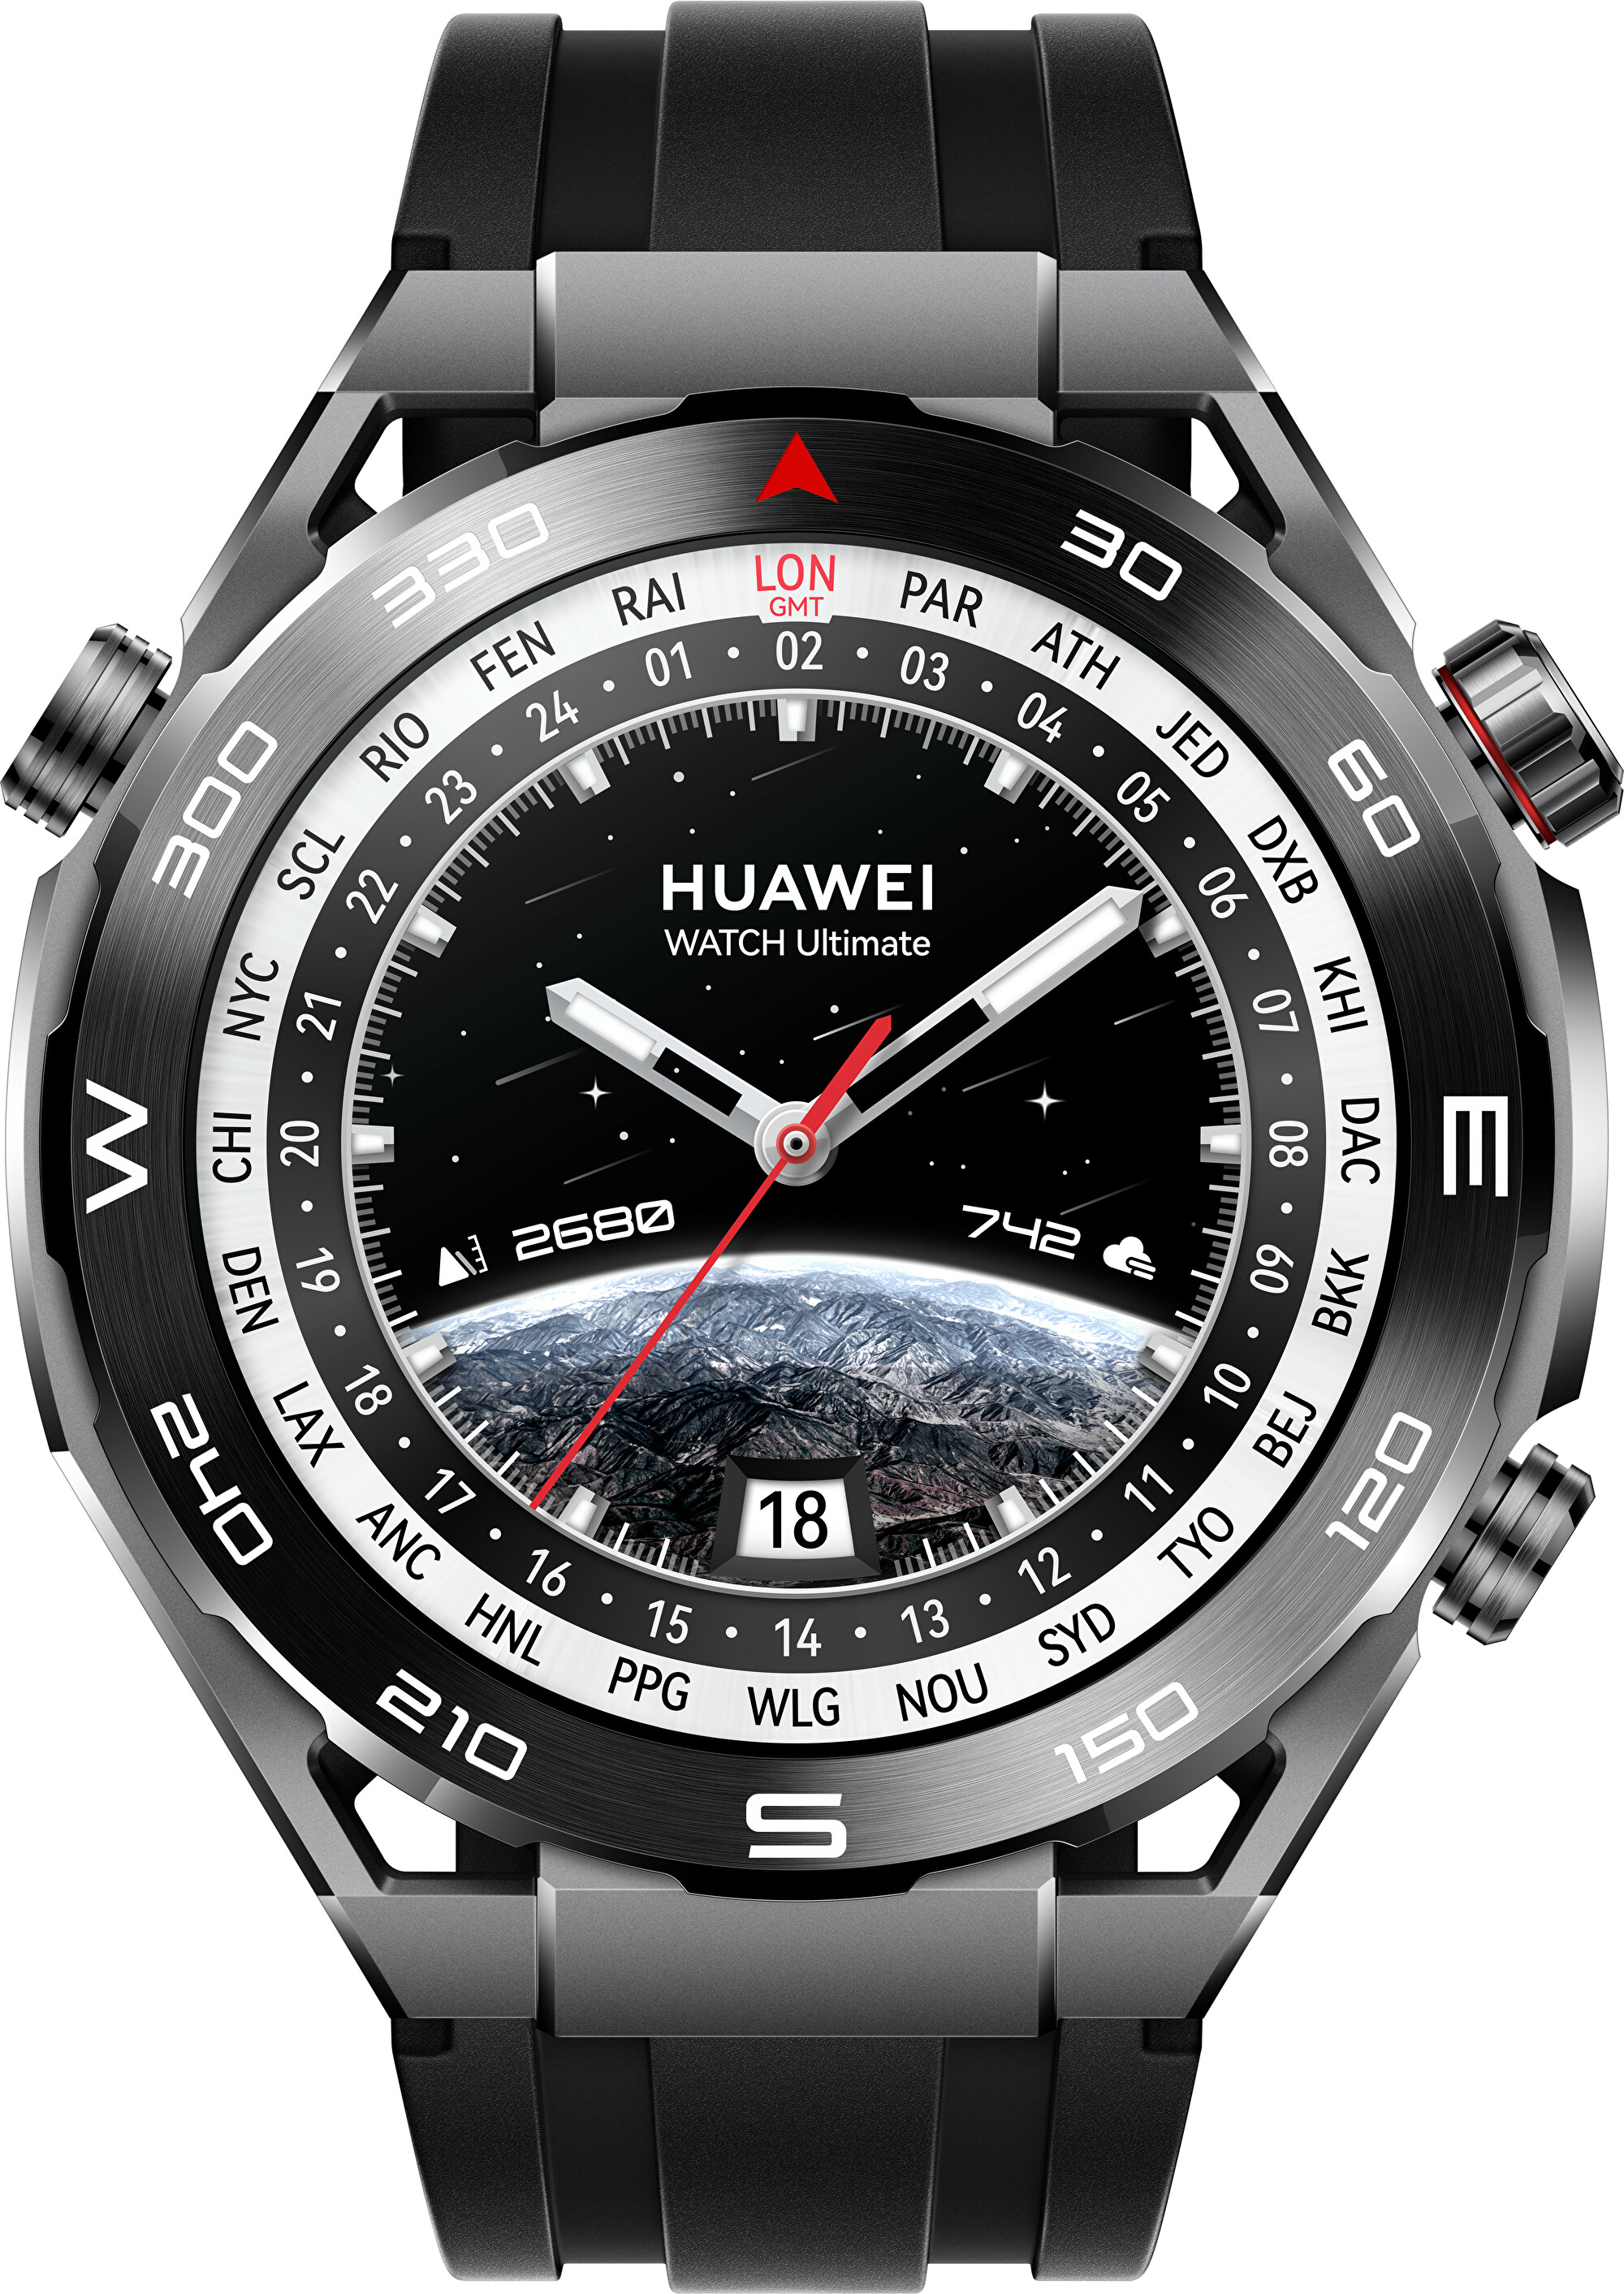 Zobrazit detail výrobku Huawei WATCH Ultimate Expedition Black